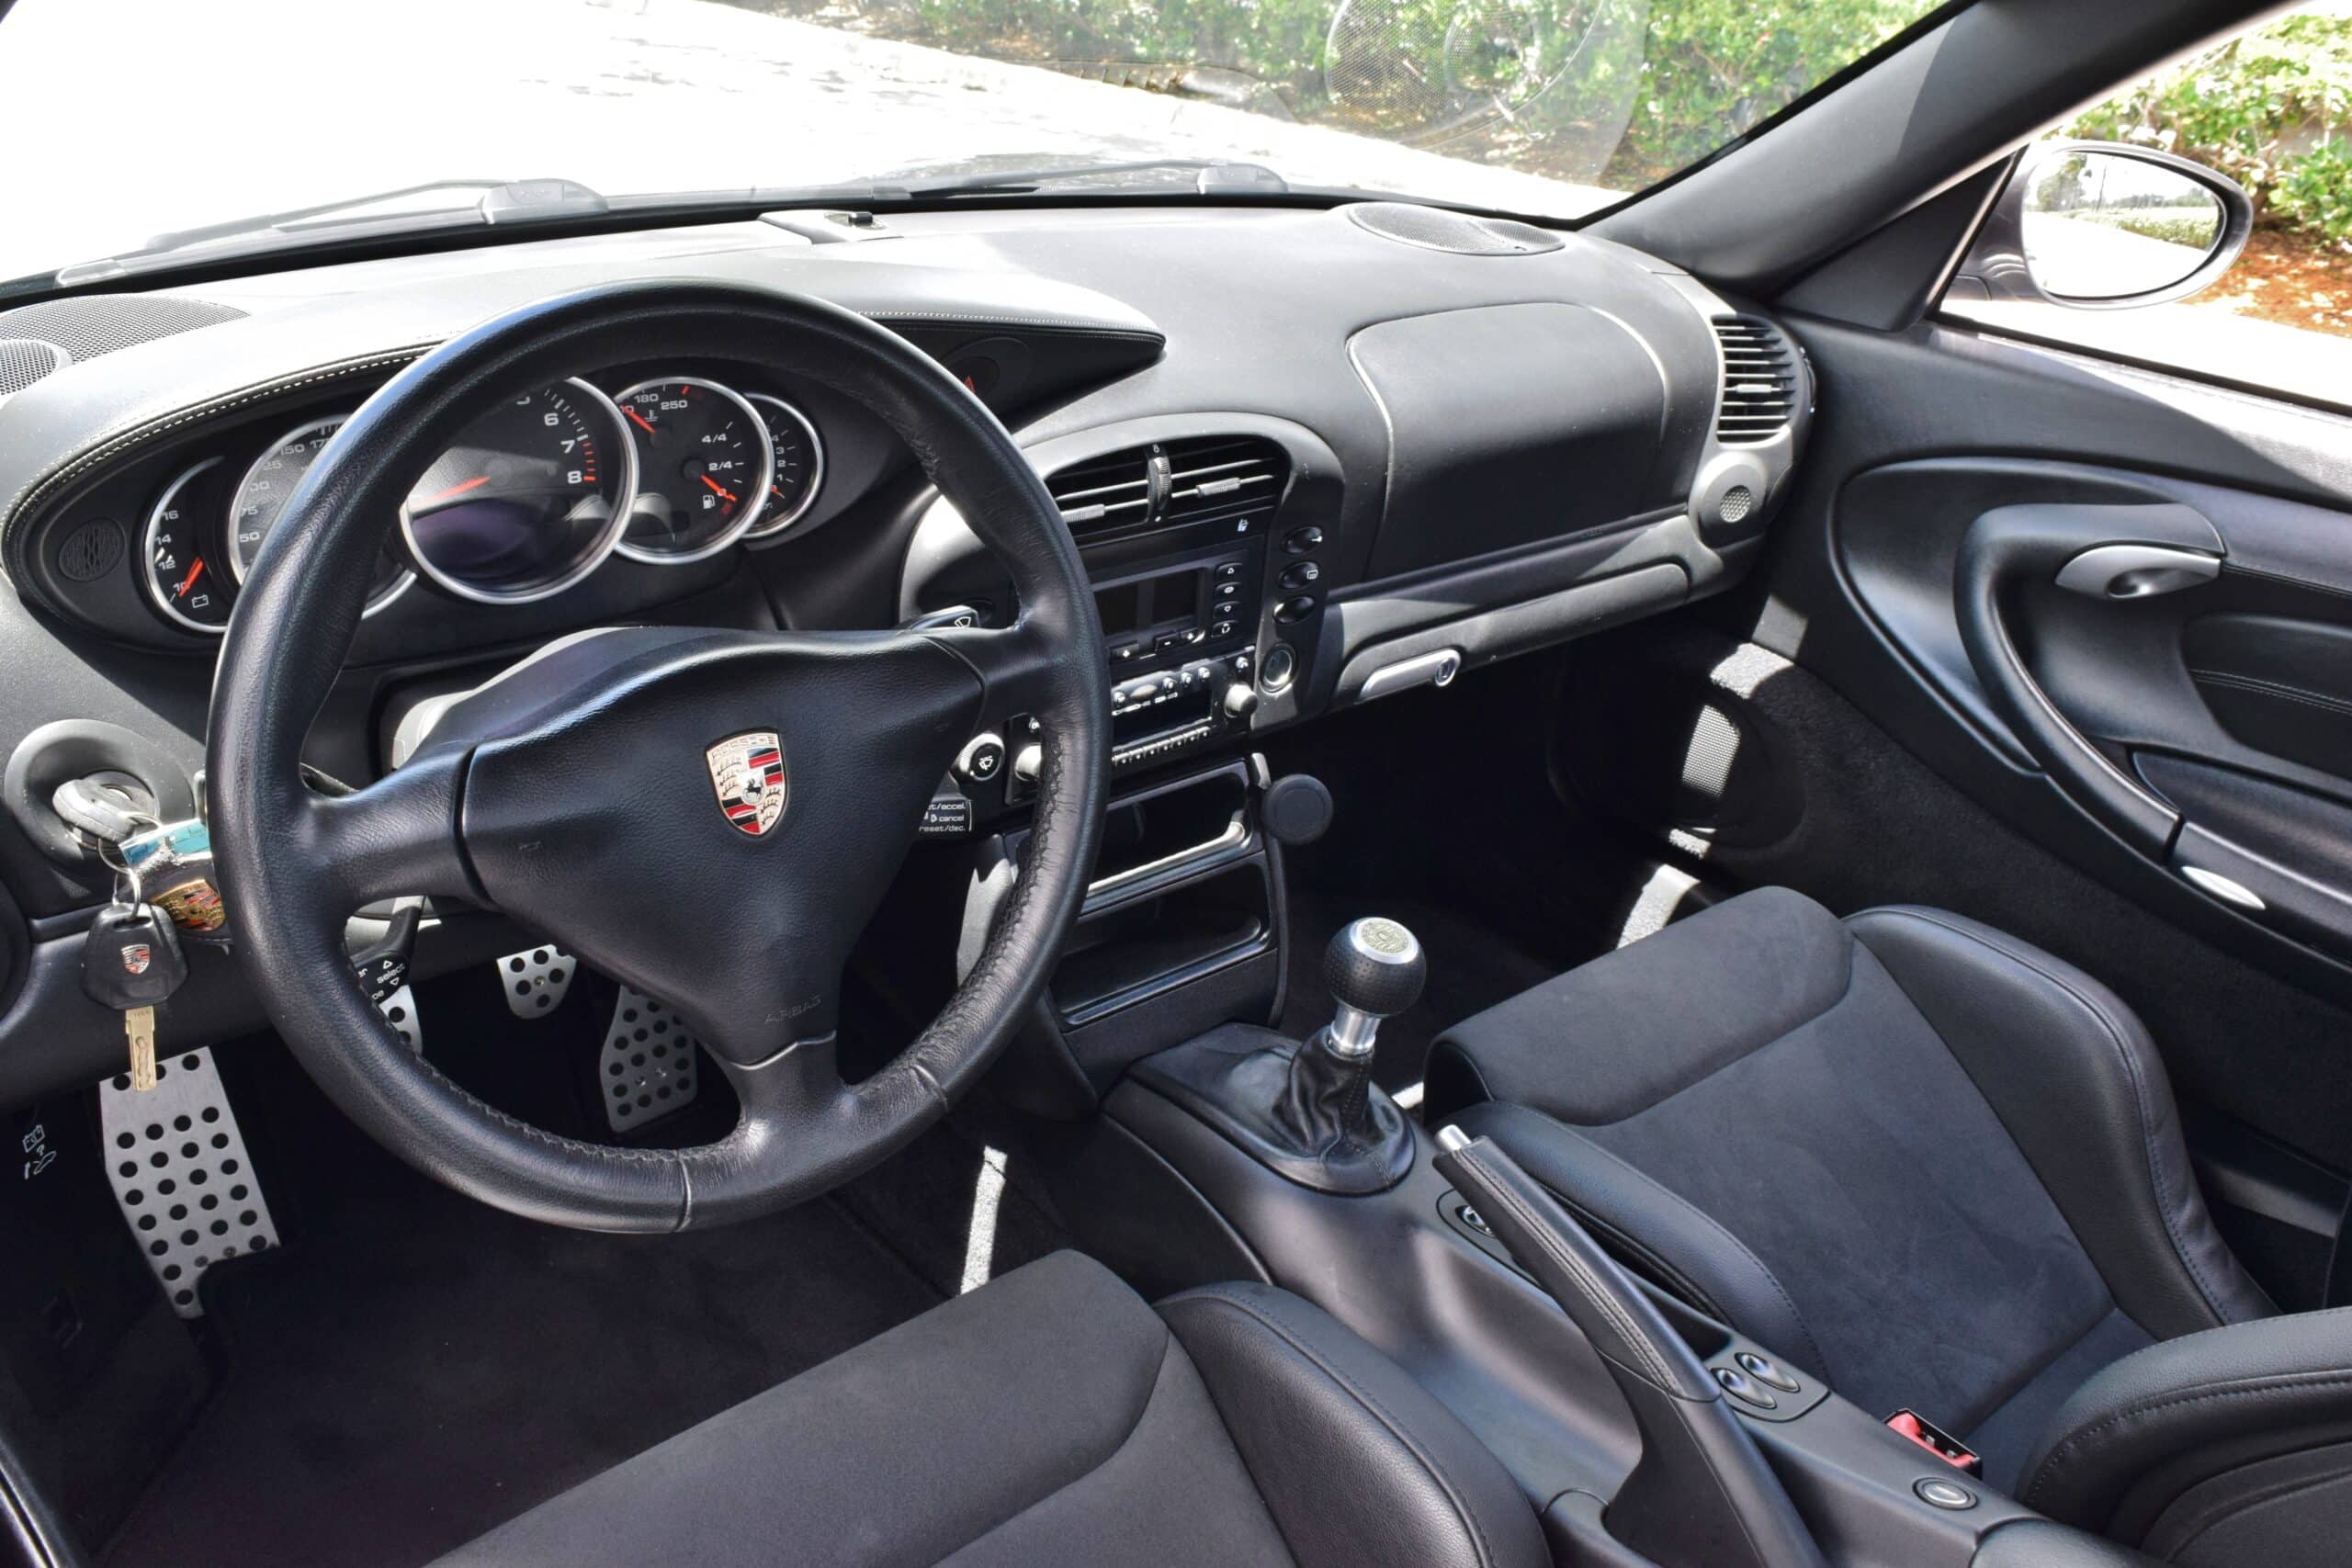 2002 Porsche 911 996 C4S Widebody Show Car- 6 Speed manual -IMS Bearing-Coilovers-Recaro Seats-100% Original Paint